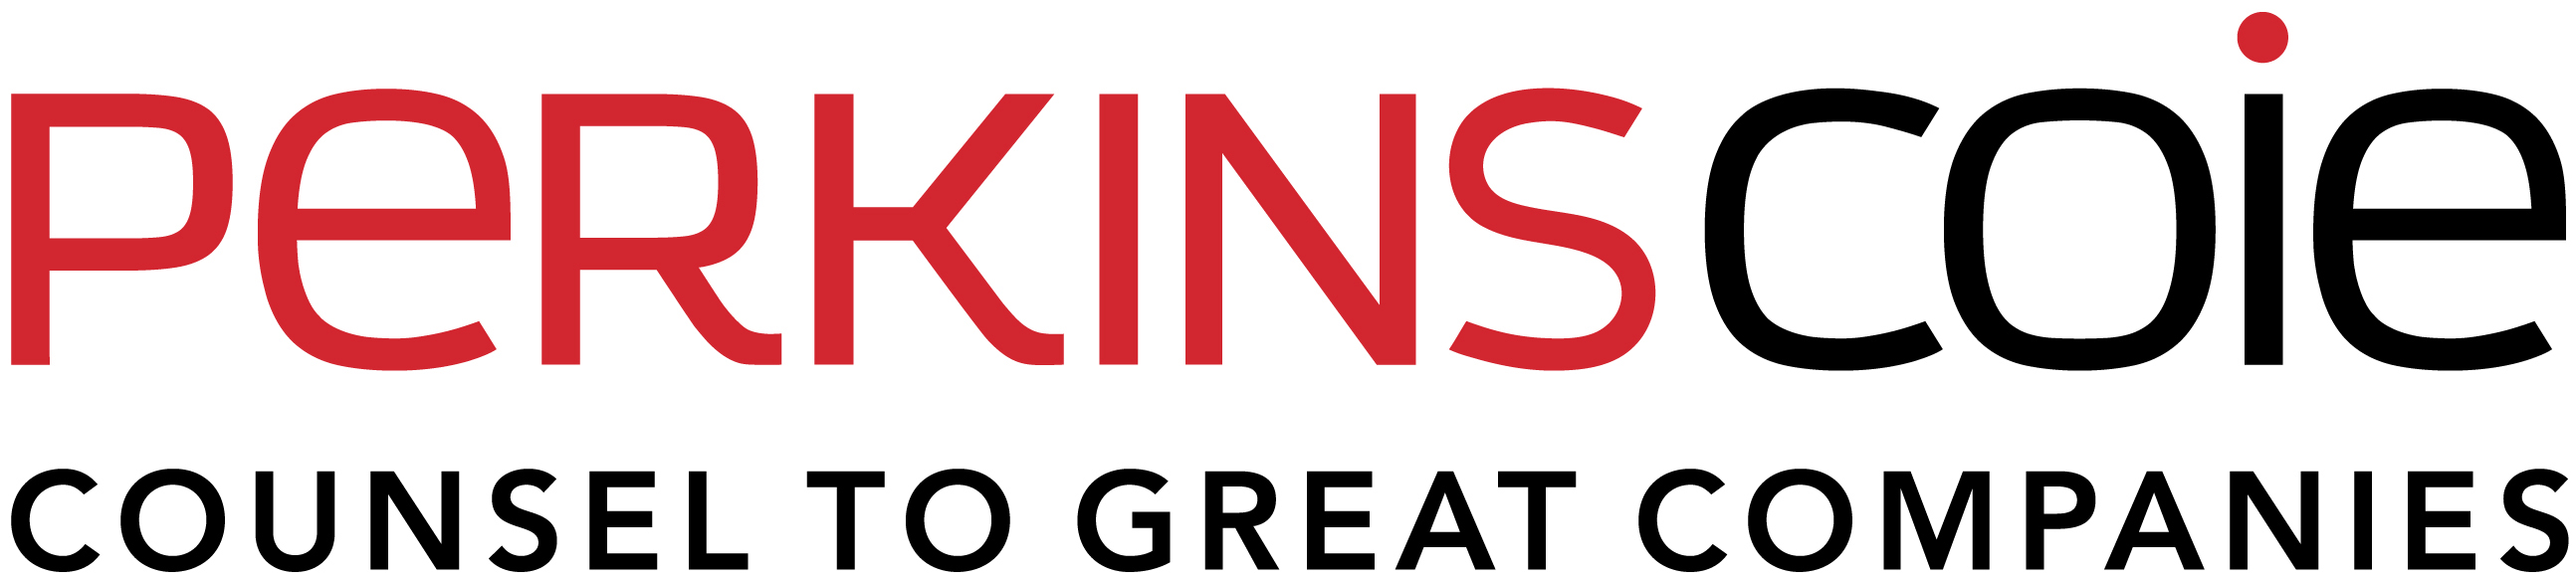 Perkins Coie Logo 2